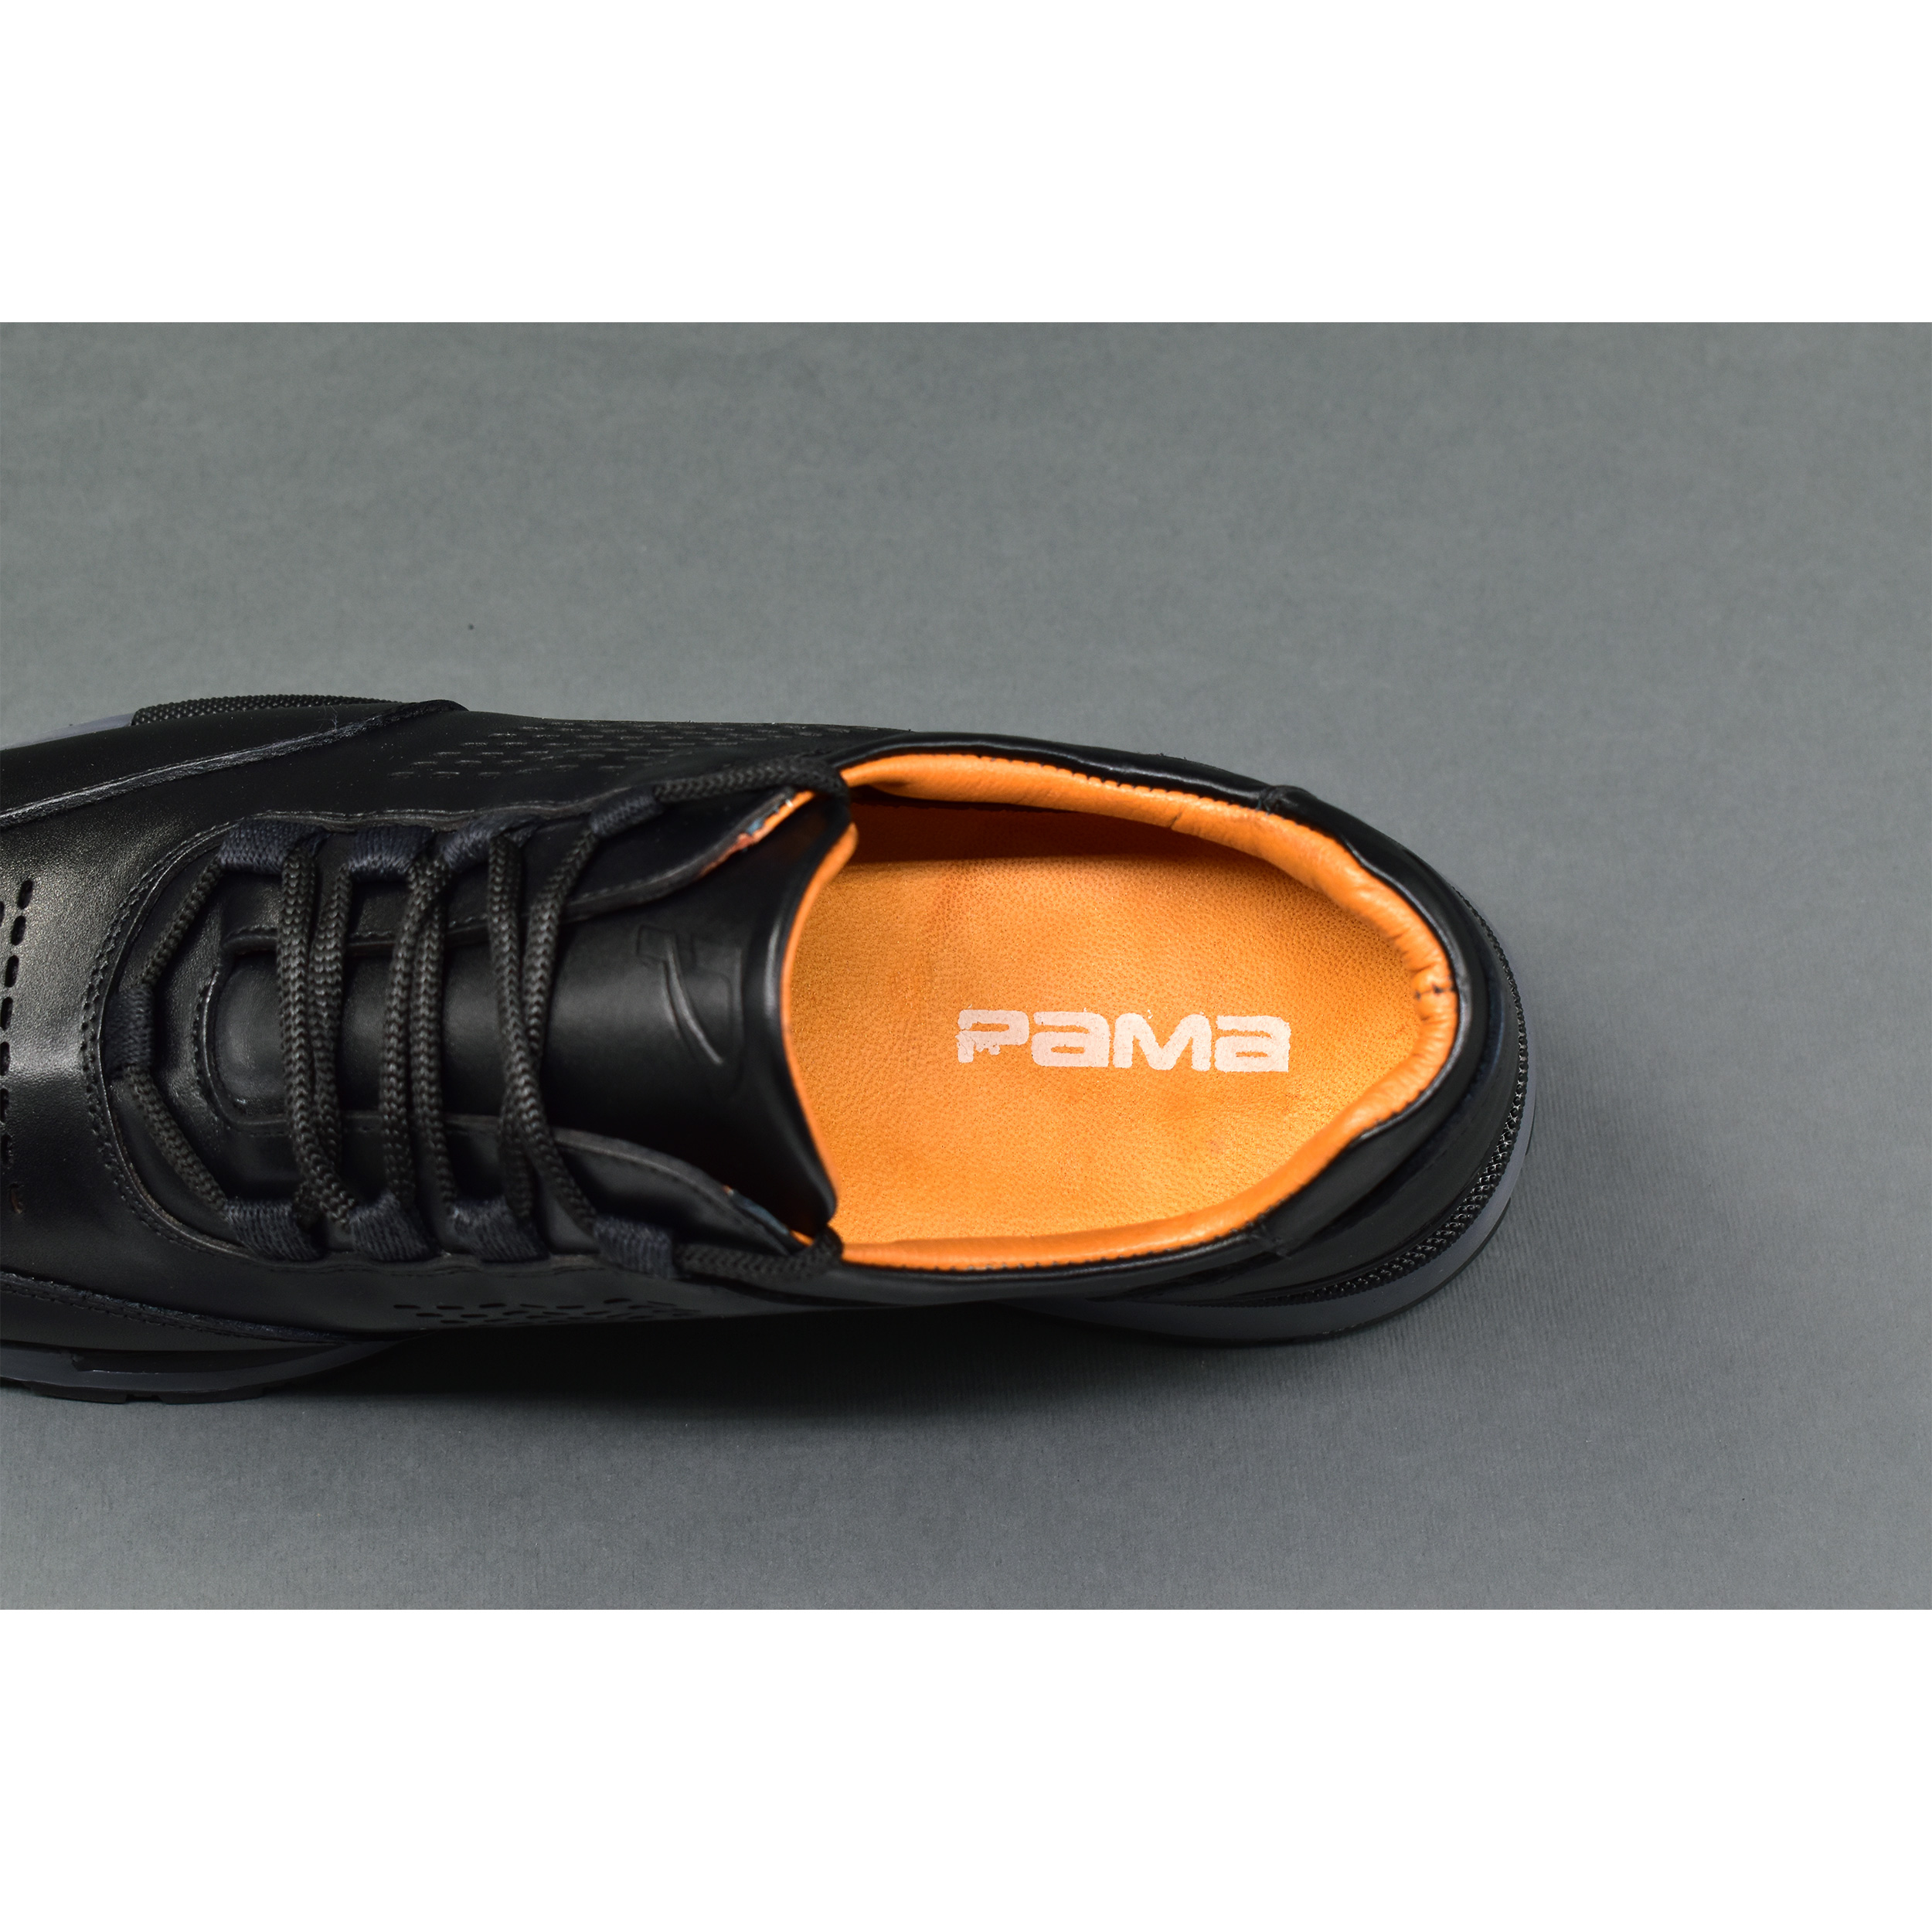 کفش روزمره مردانه پاما مدل ME-644 کد G1804 -  - 7